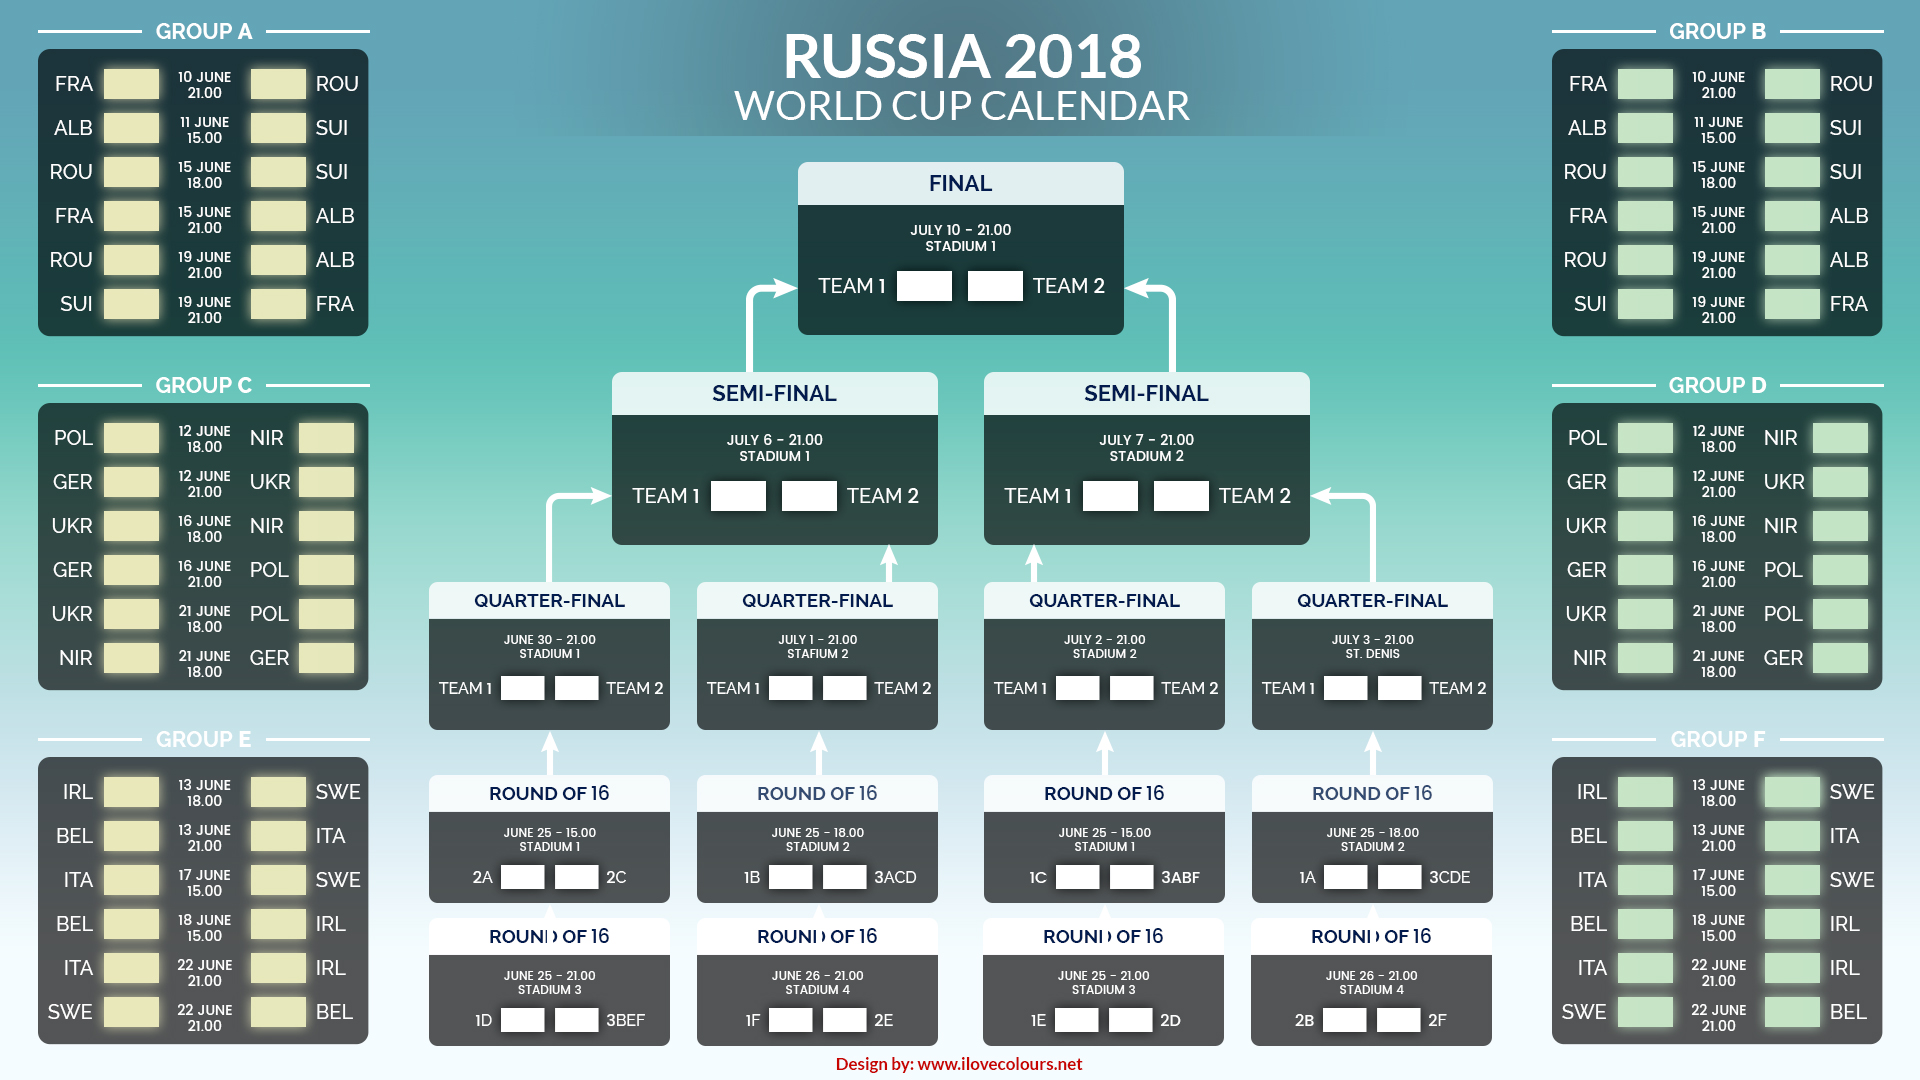 World Cup Calendar Russia 2018 - Fifa - download